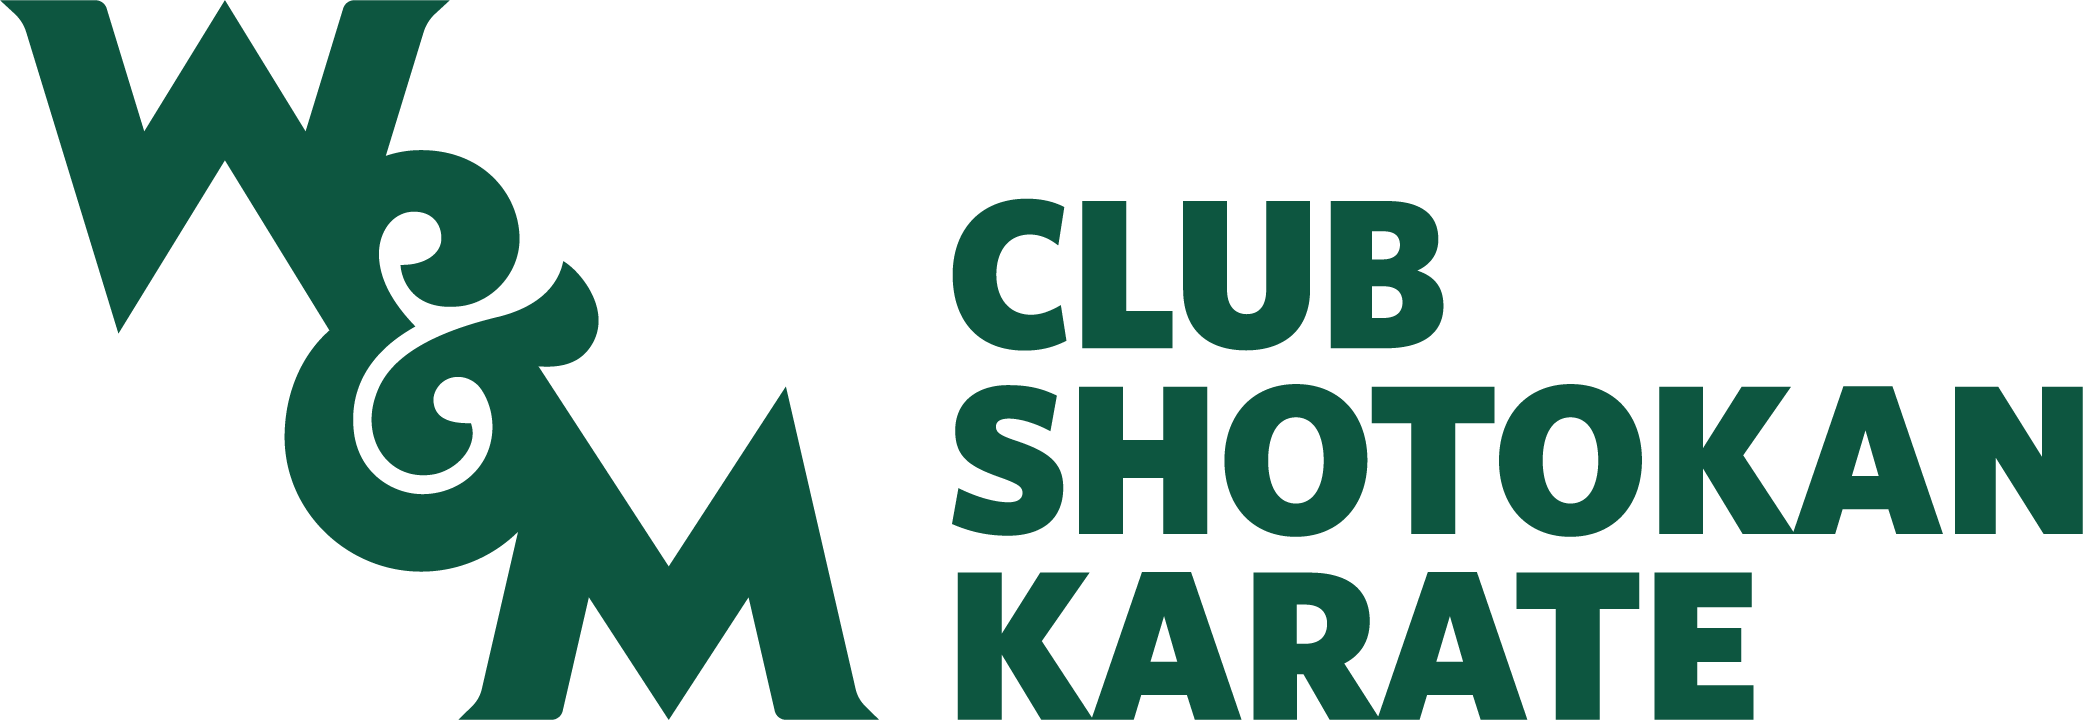 Shotokan Karate Club Logo